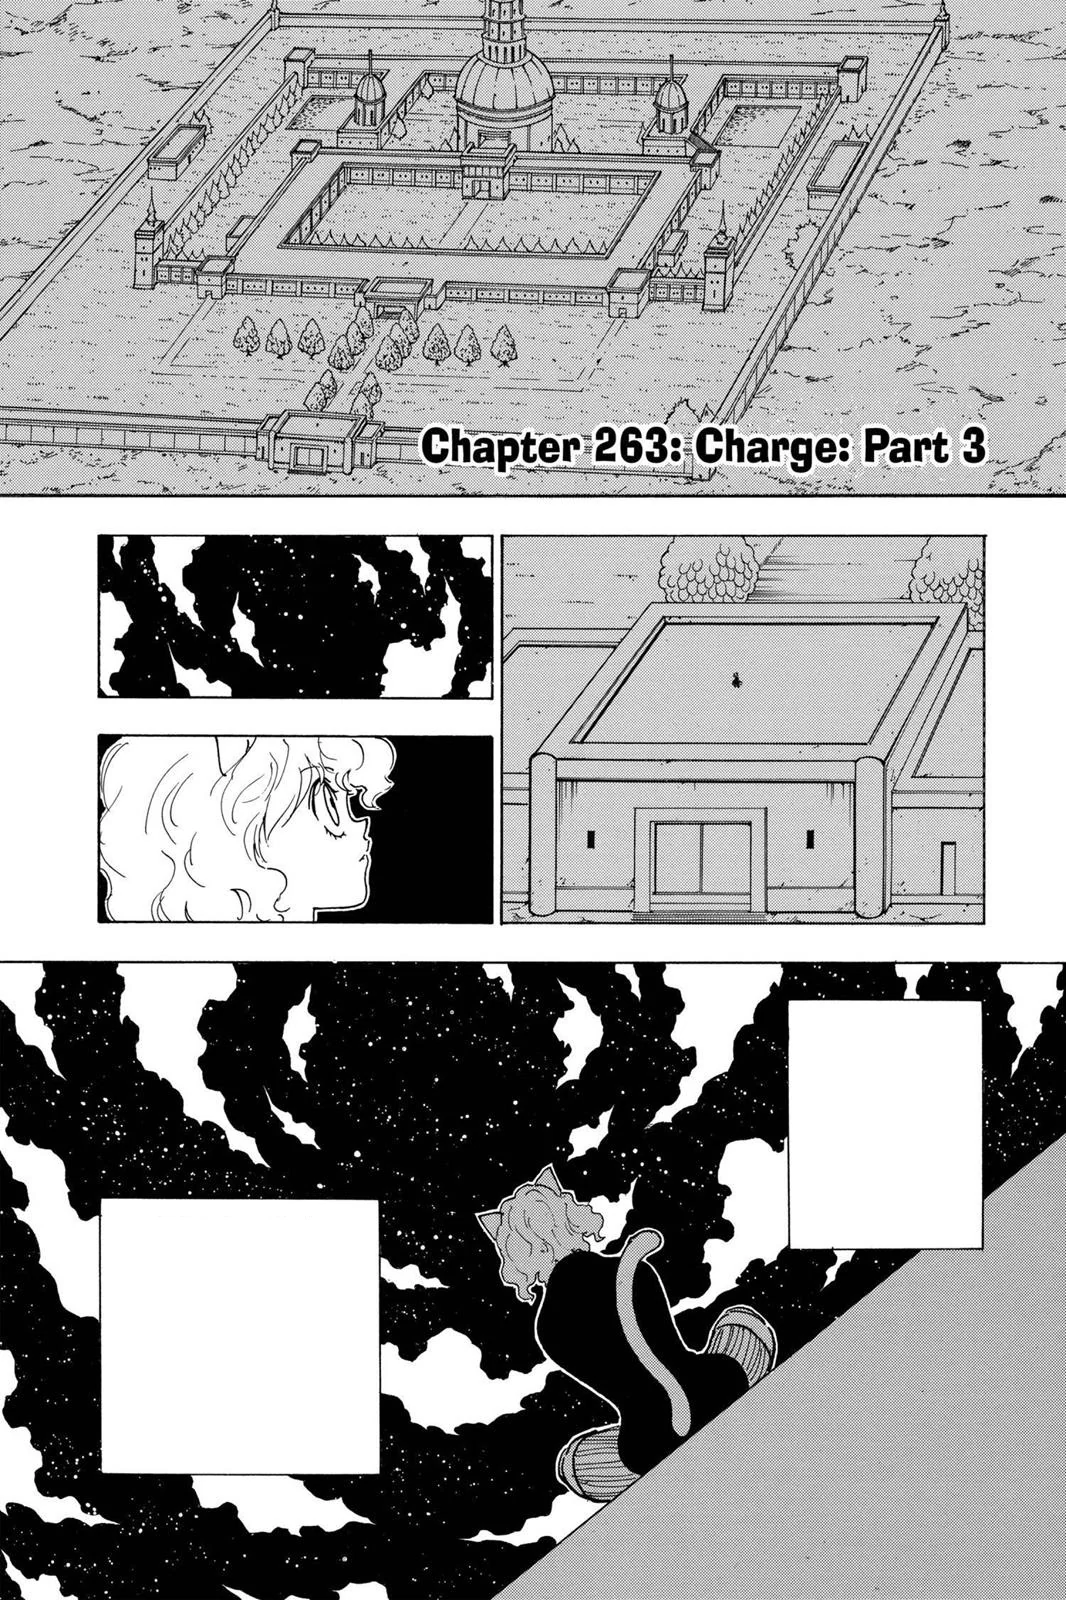 Chapter 262, Hunterpedia